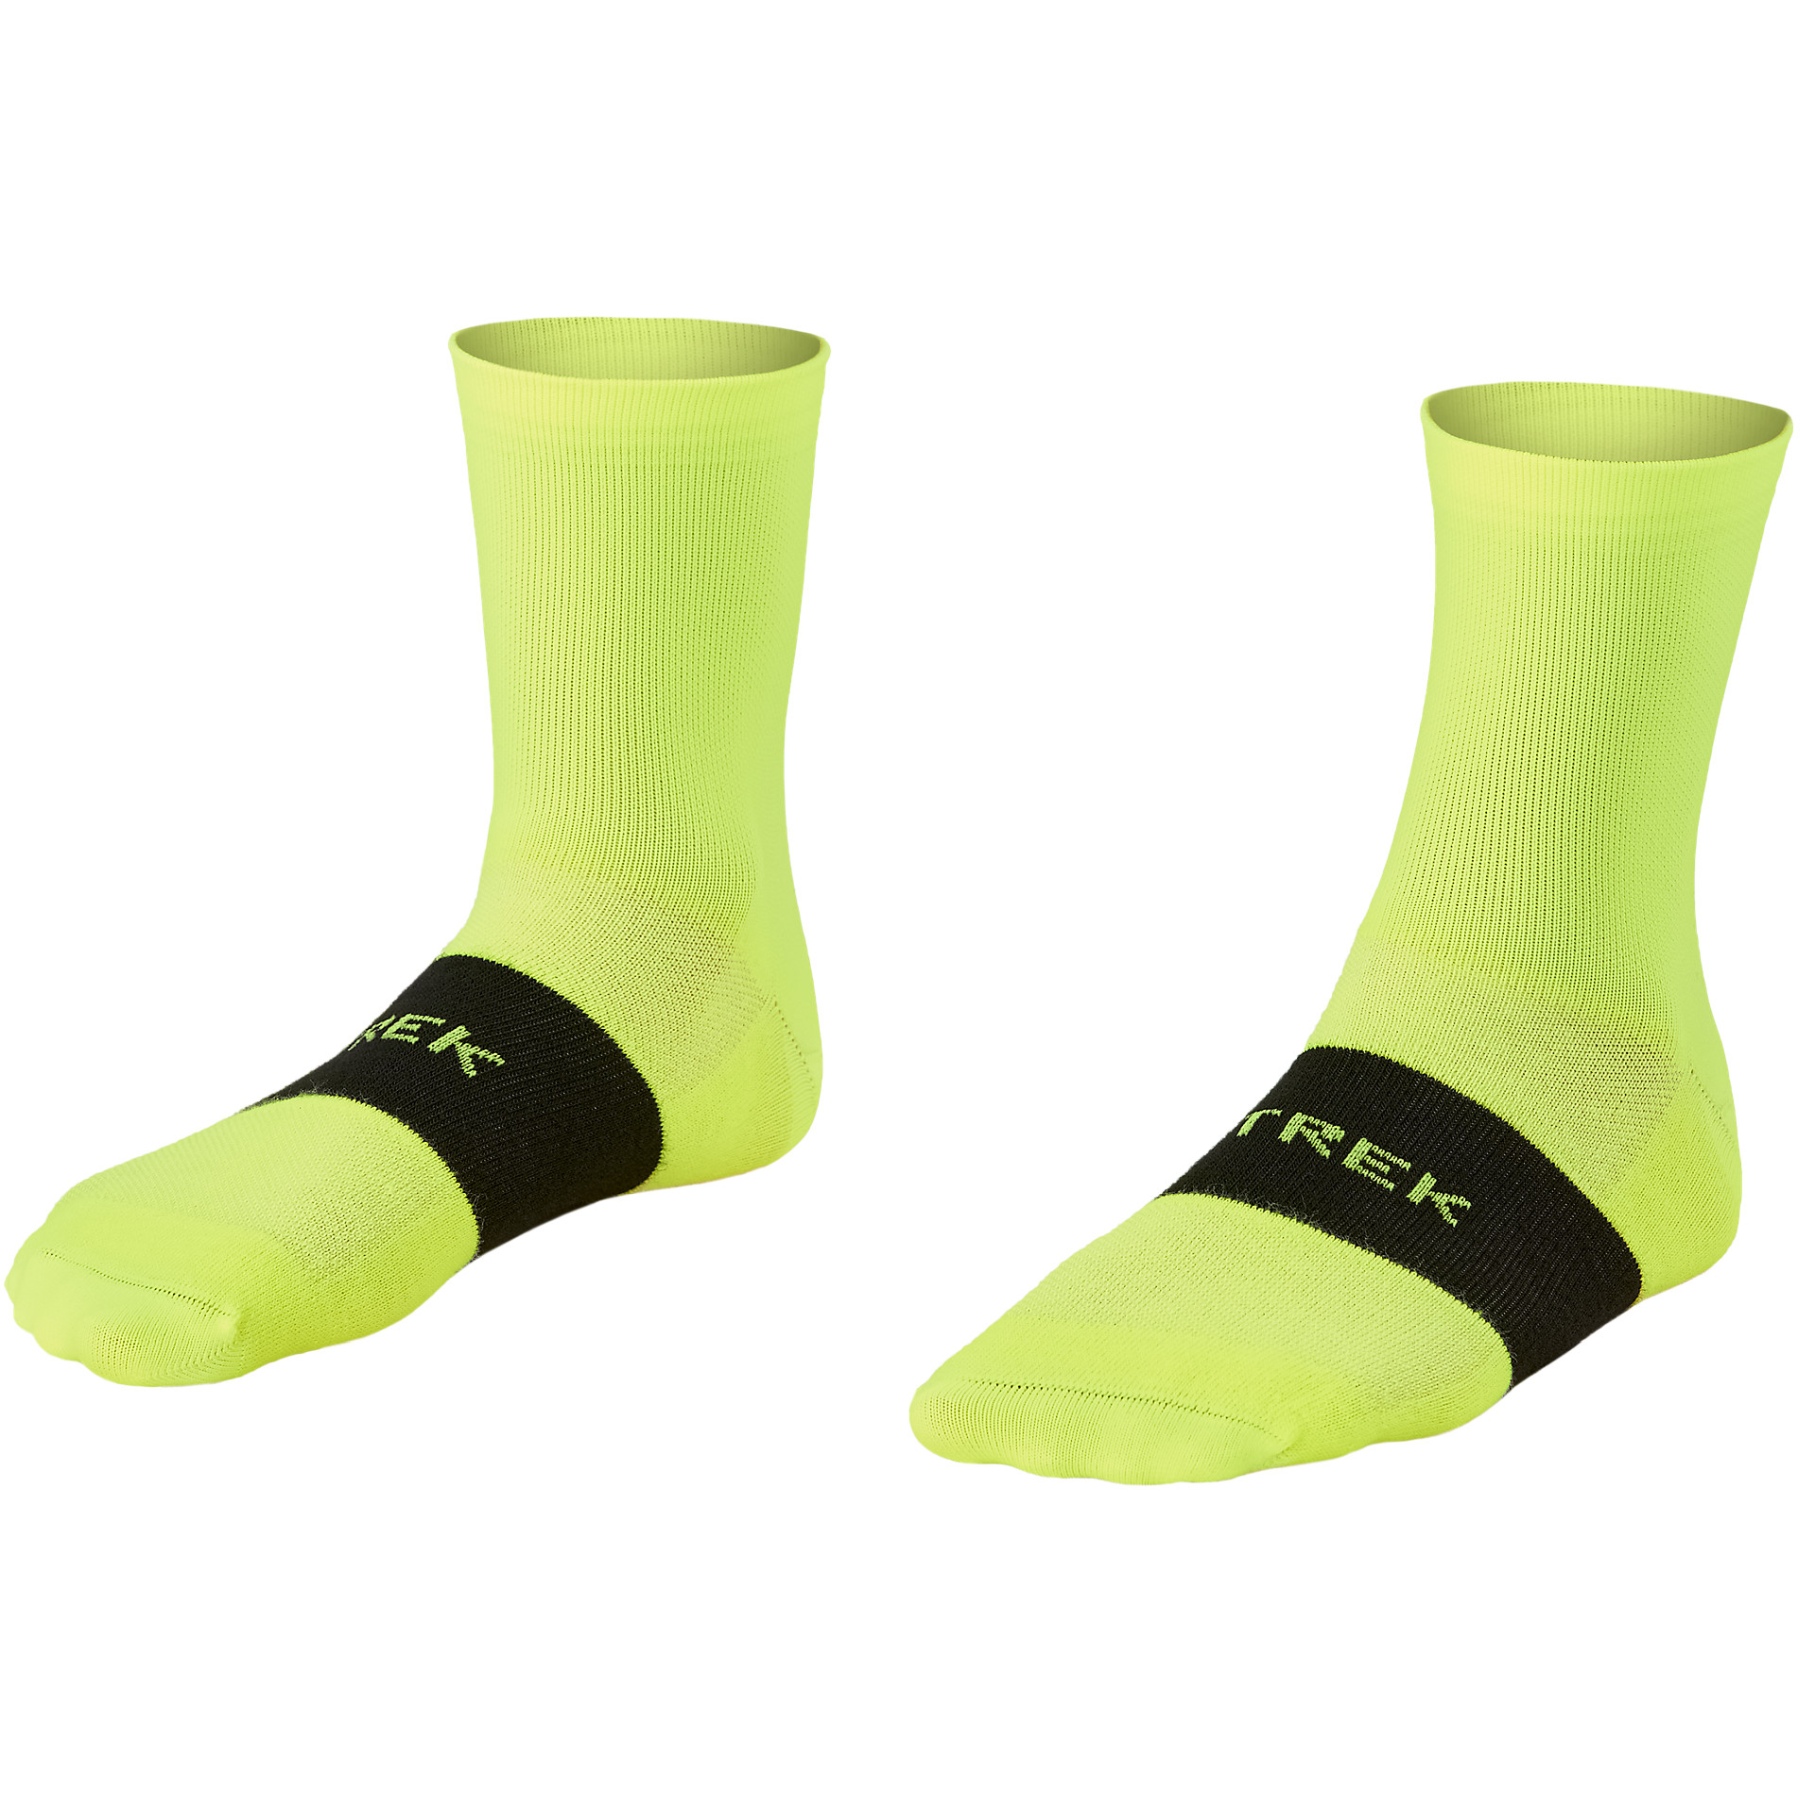 Productfoto van Trek Race Quarter Cycling Socks - Radioactive Yellow